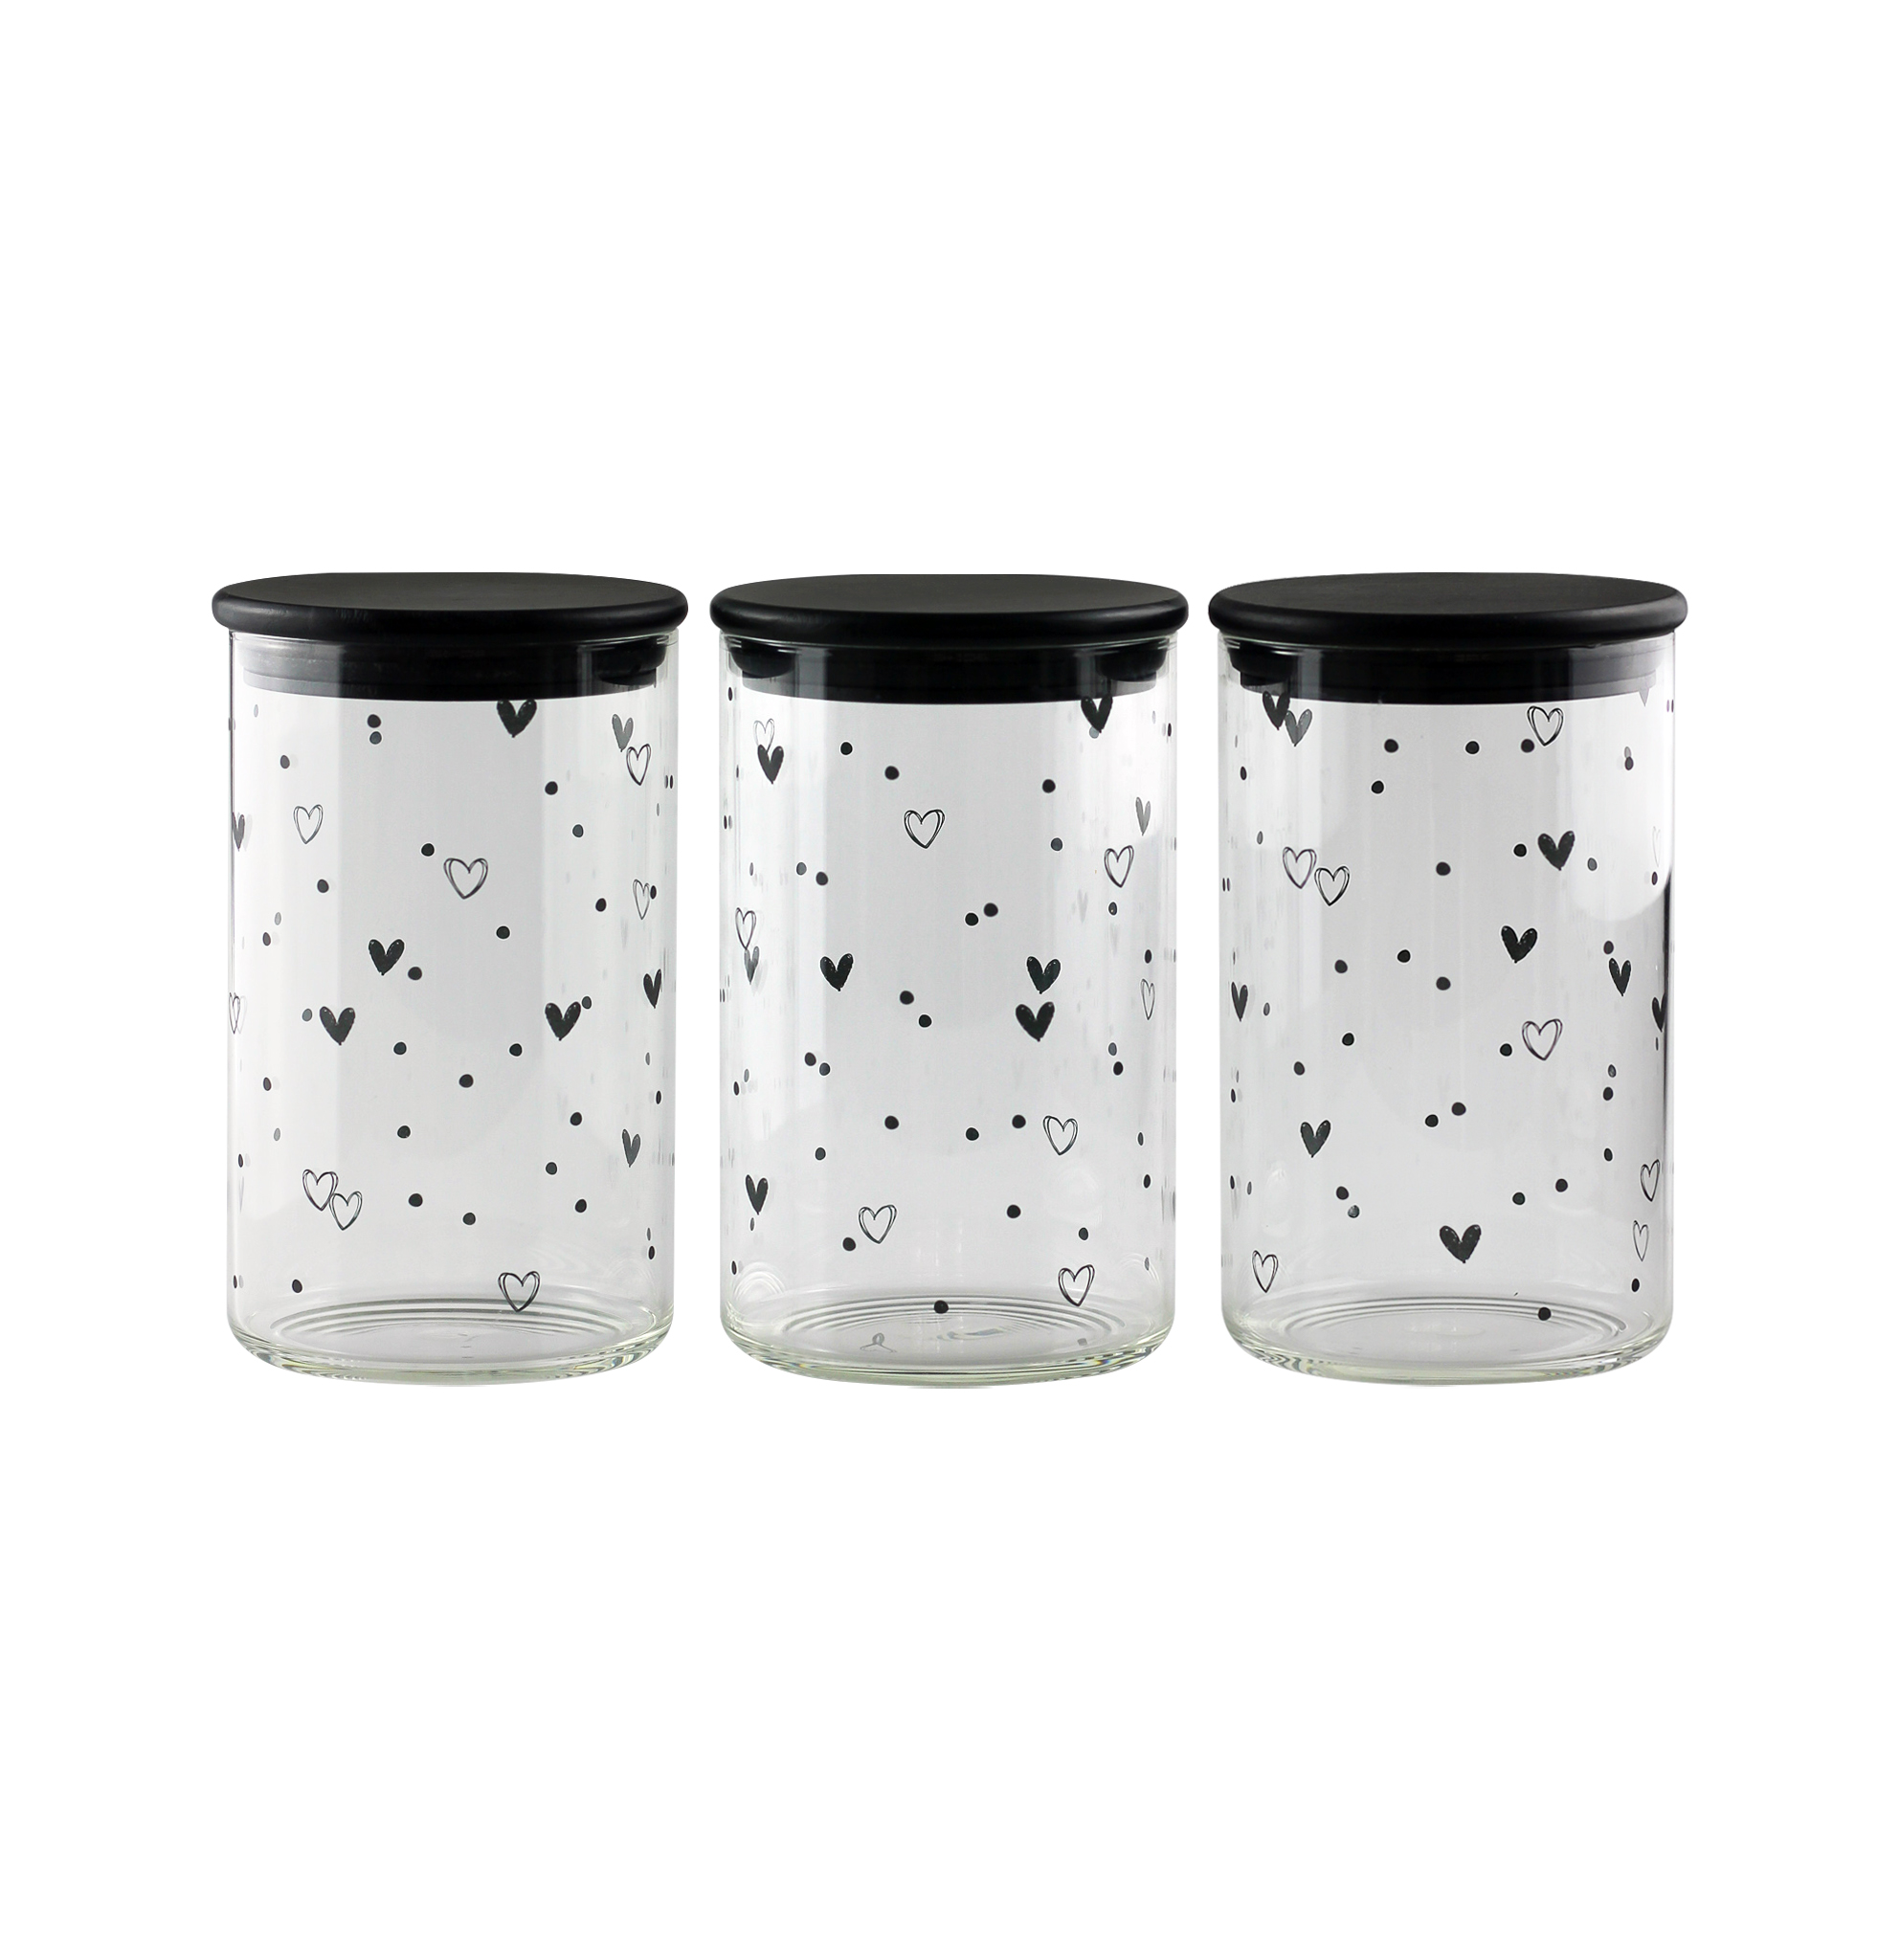 Set 3 Glass Black Heart and Dots Bamboo Storage Jars- Black lid 1000ml | Pretty Little Home